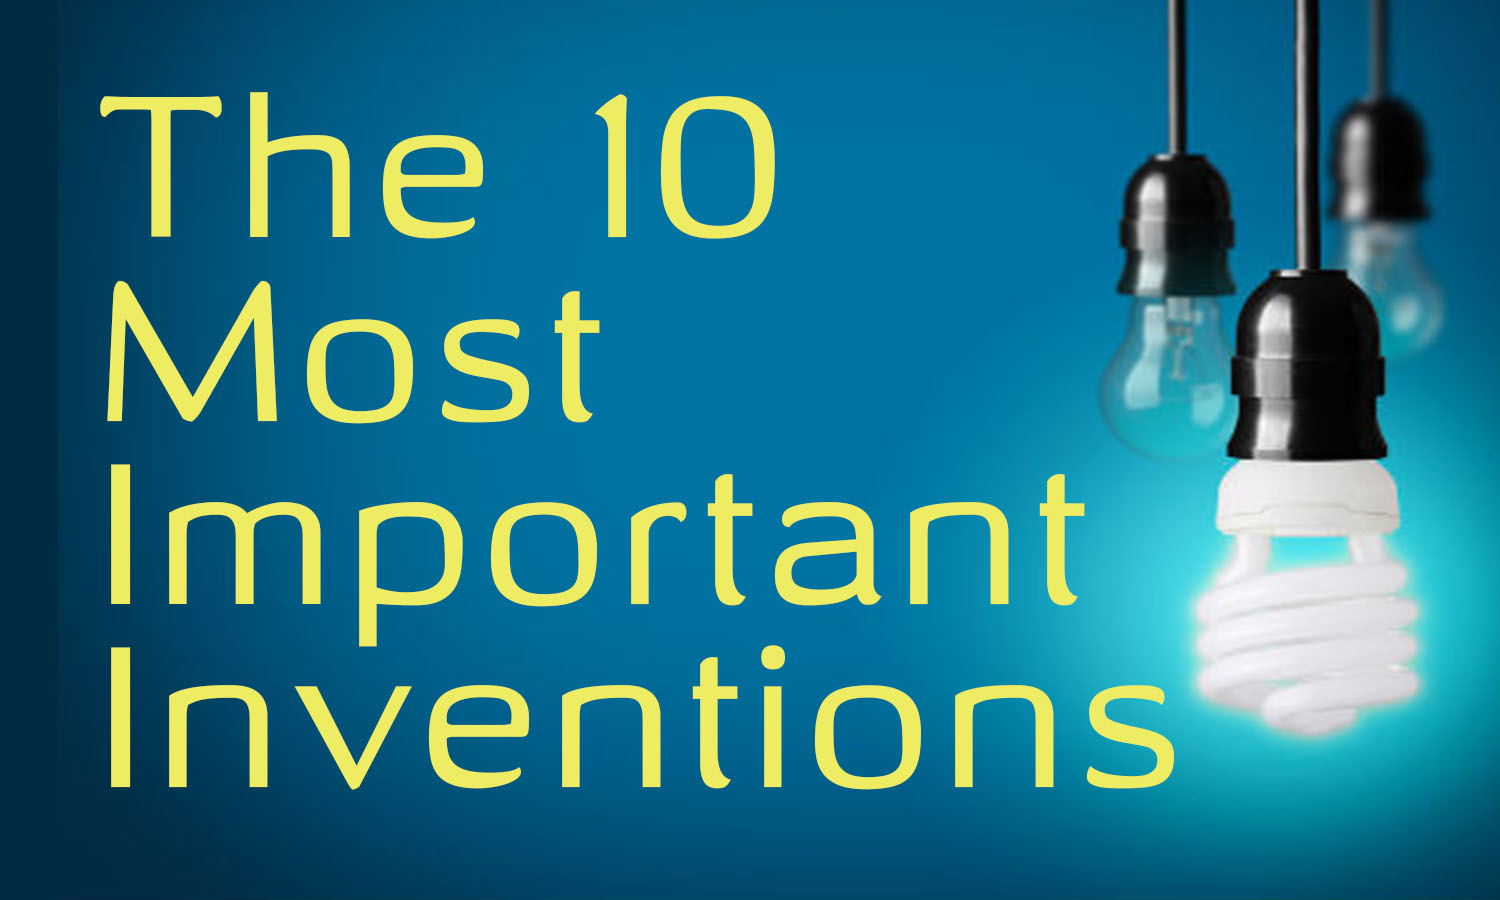 The 10 Inventions - Memorise